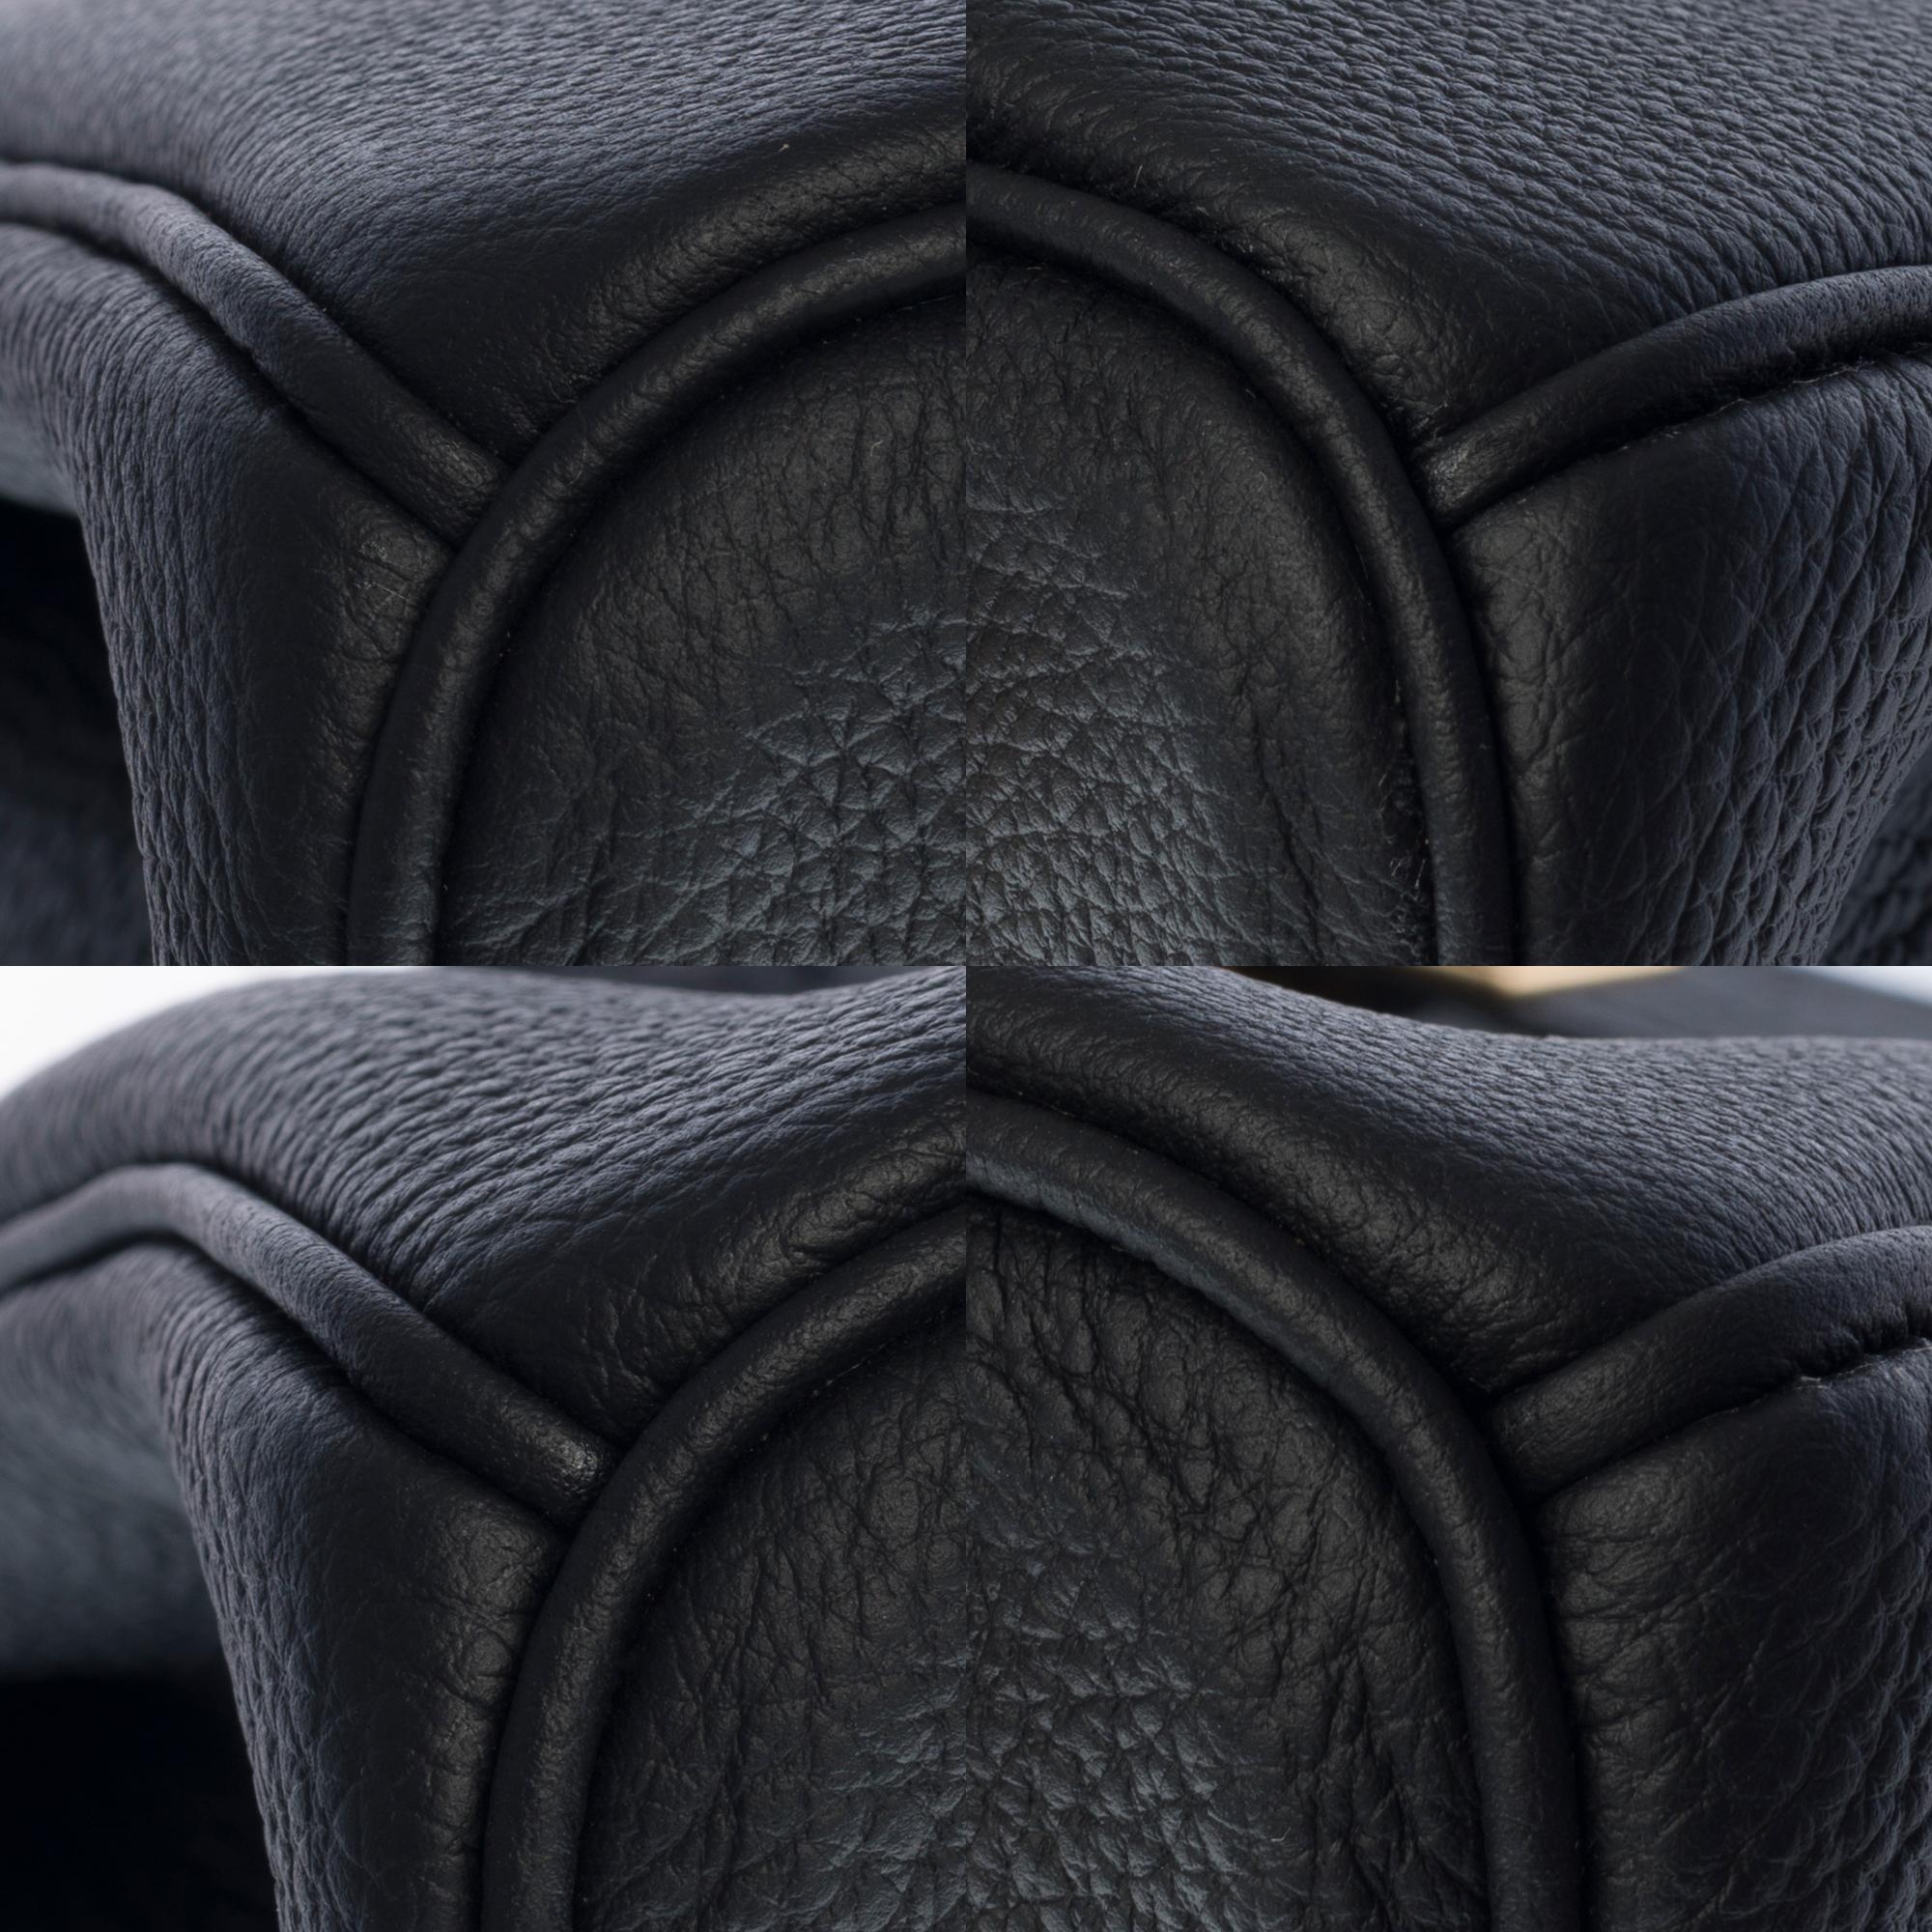 Brand New - Hermès Birkin 30 handbag in Black Togo leather, gold hardware 3